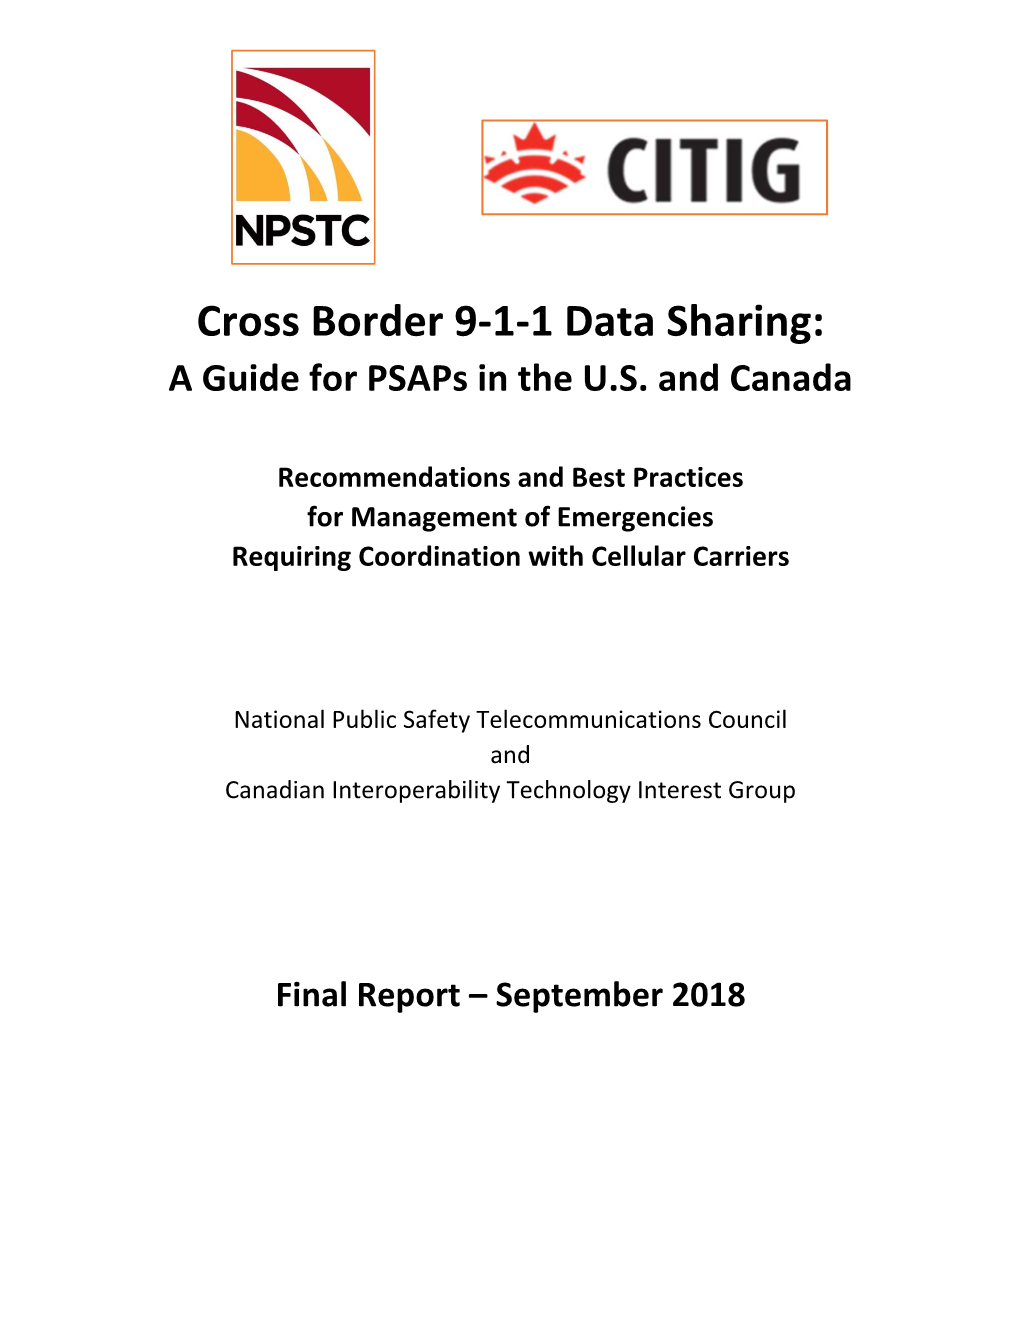 NPSTC Cross Border 911 Data Sharing Report